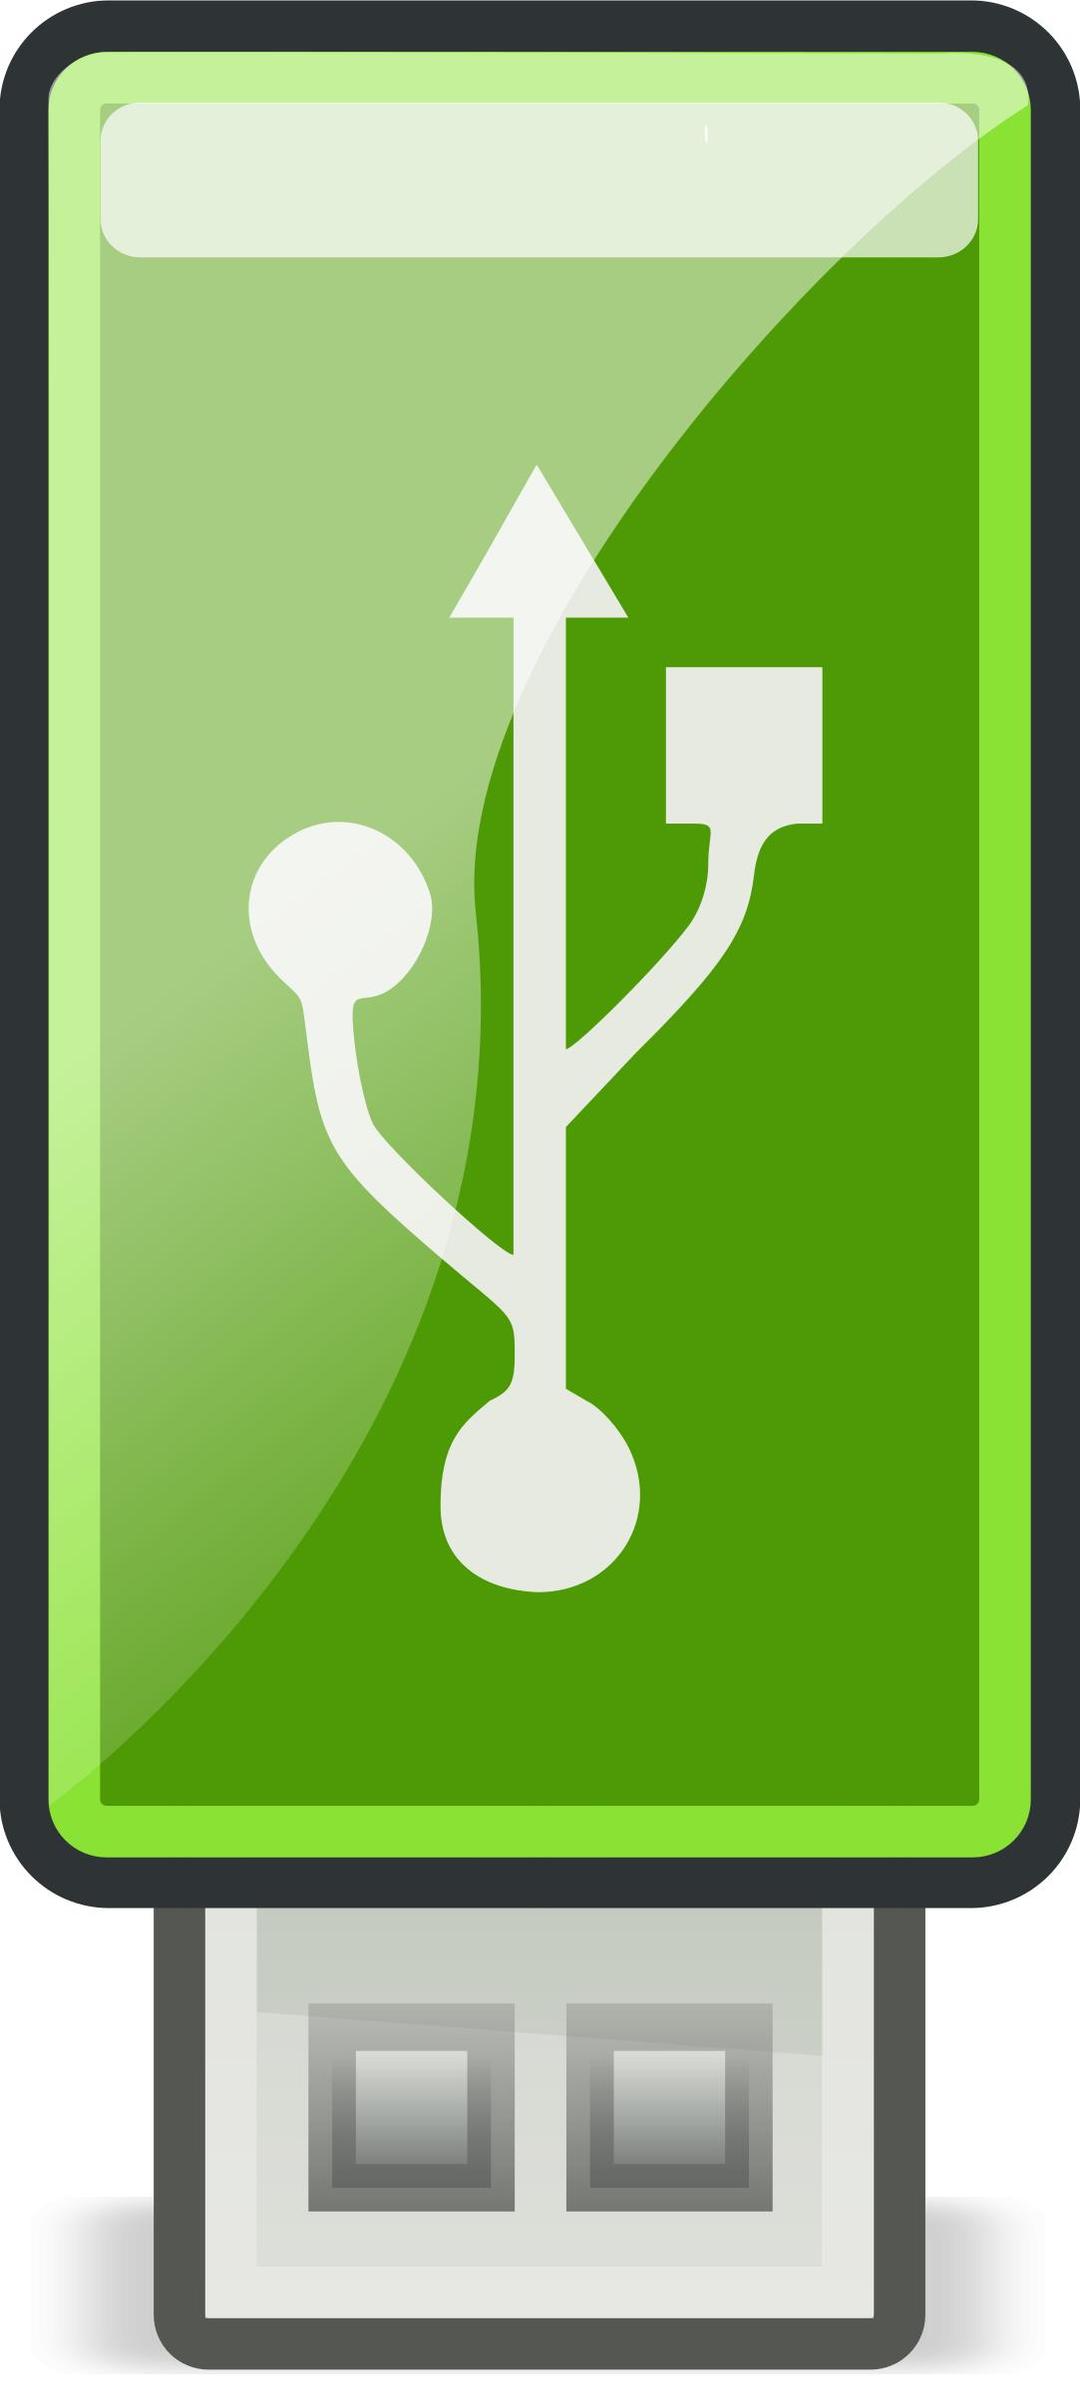 USB Green - Tango style png transparent